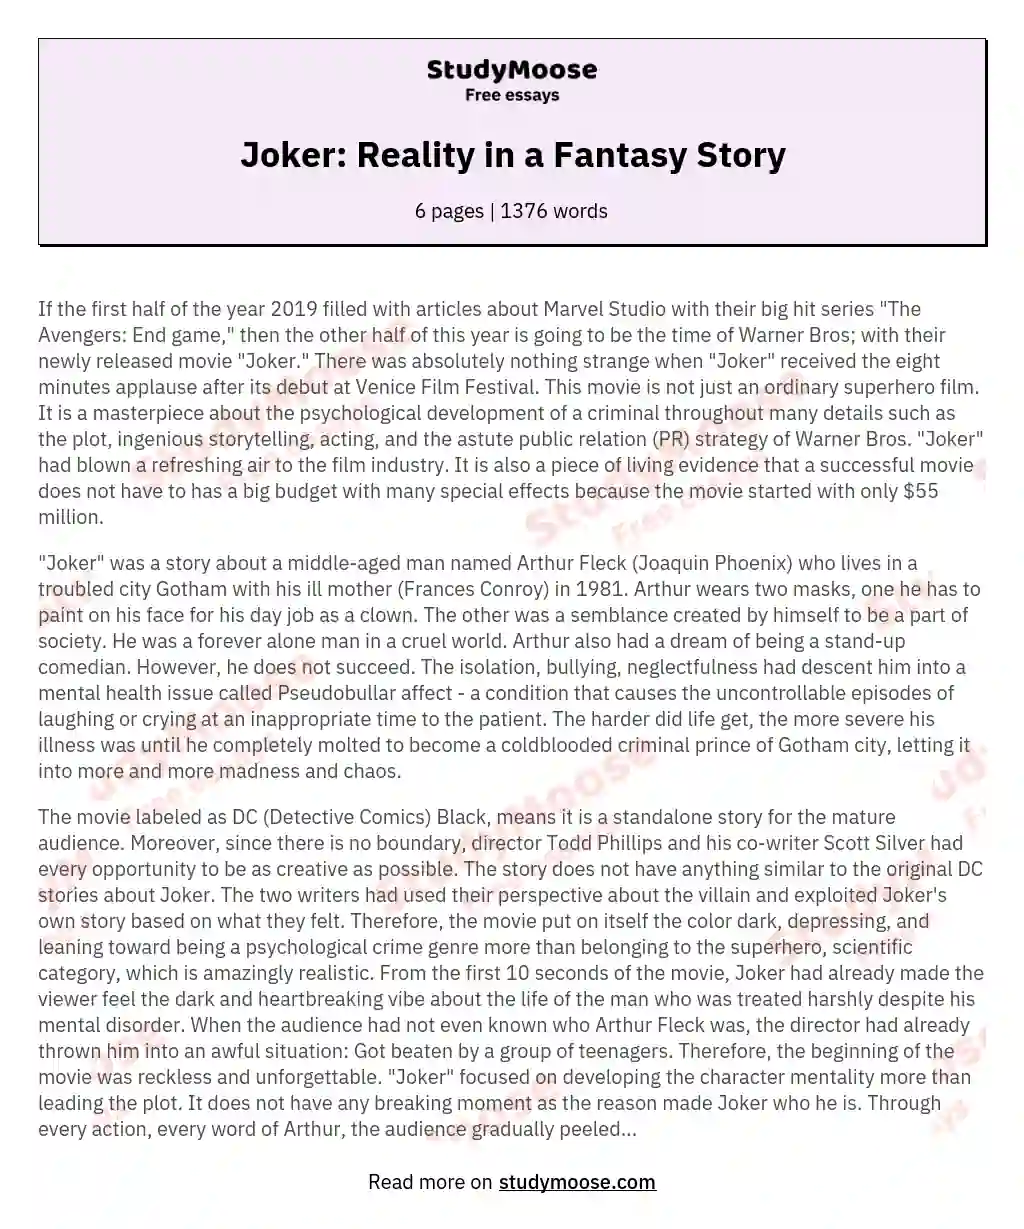 Joker: Reality in a Fantasy Story essay